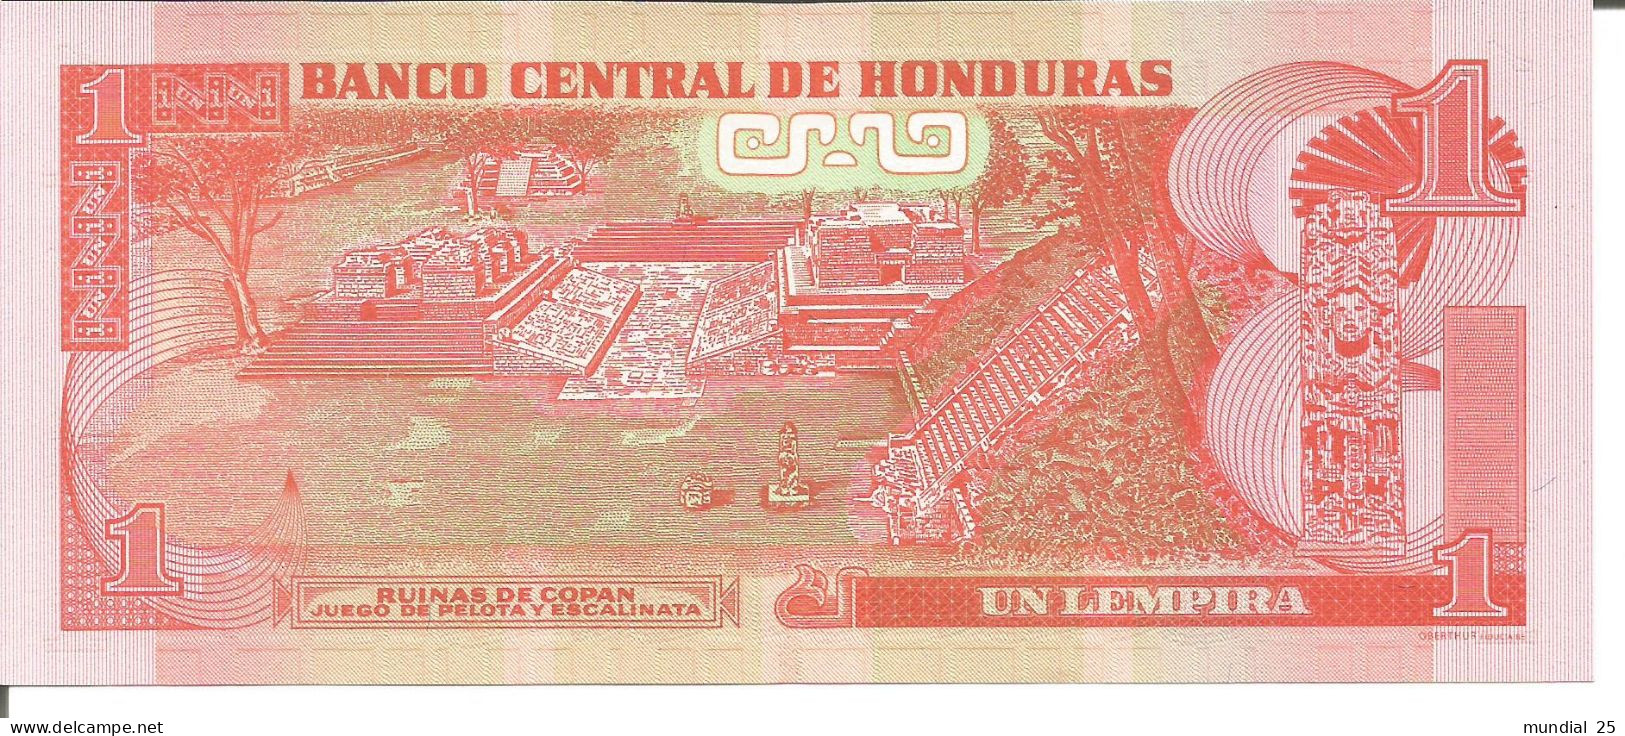 2 HONDURAS NOTES 1 LEMPIRA 01/03/2012 - Honduras